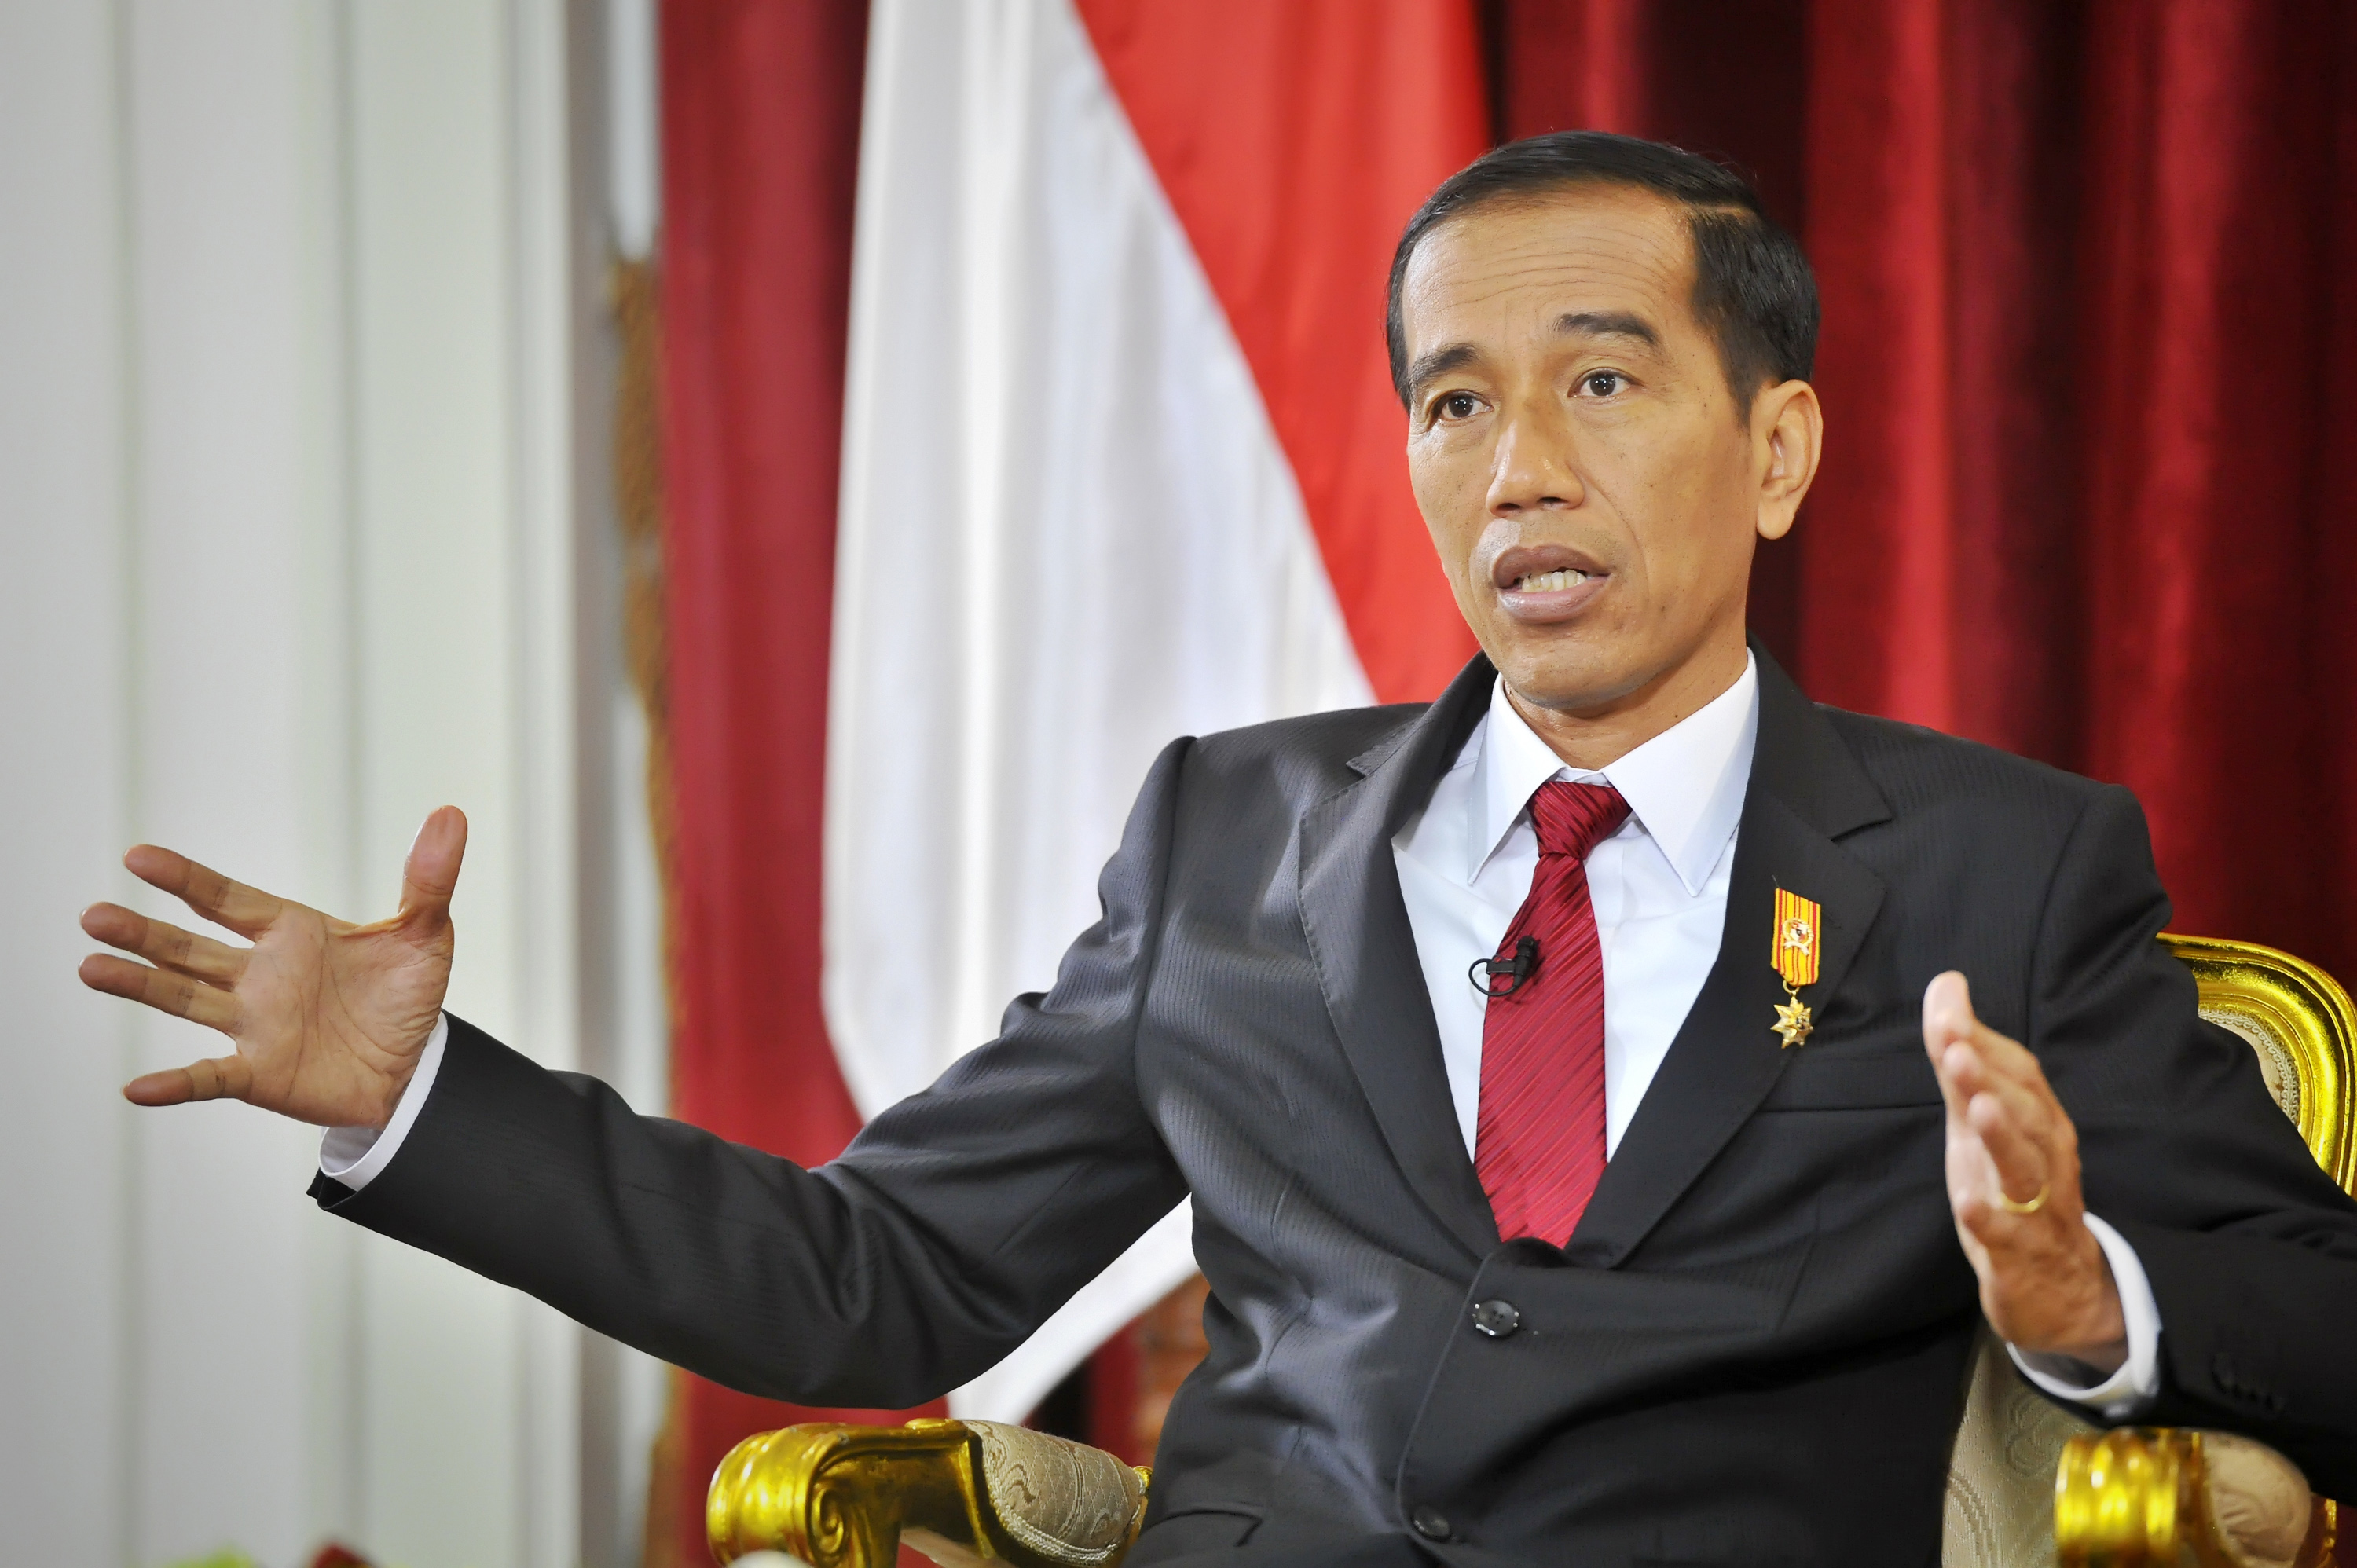 Cegah Warga Mudik, Jokowi Wacanakan Libur Lebaran Diganti